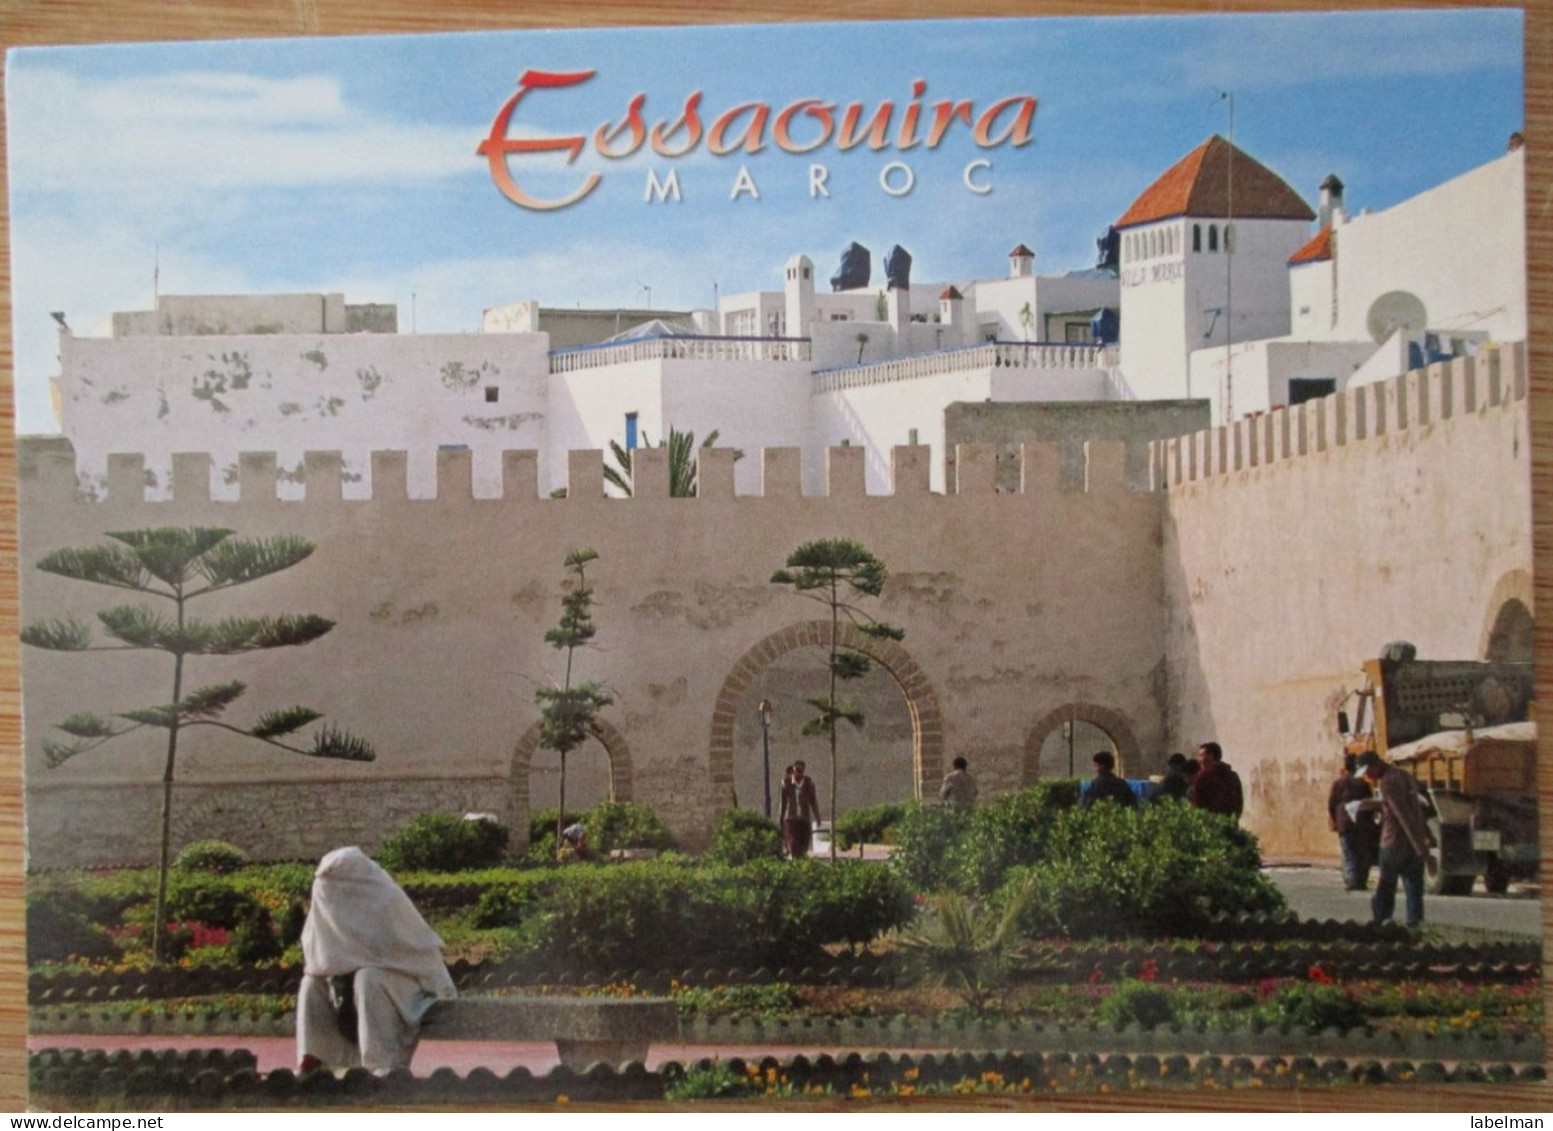 MAROC MOROCCO ESSAOUIRA CARTE POSTALE POSTCARD CARTOLINA KARTE PICTURE ANSICHTSKARTE CARD PHOTO POSTKARTE - Marrakech